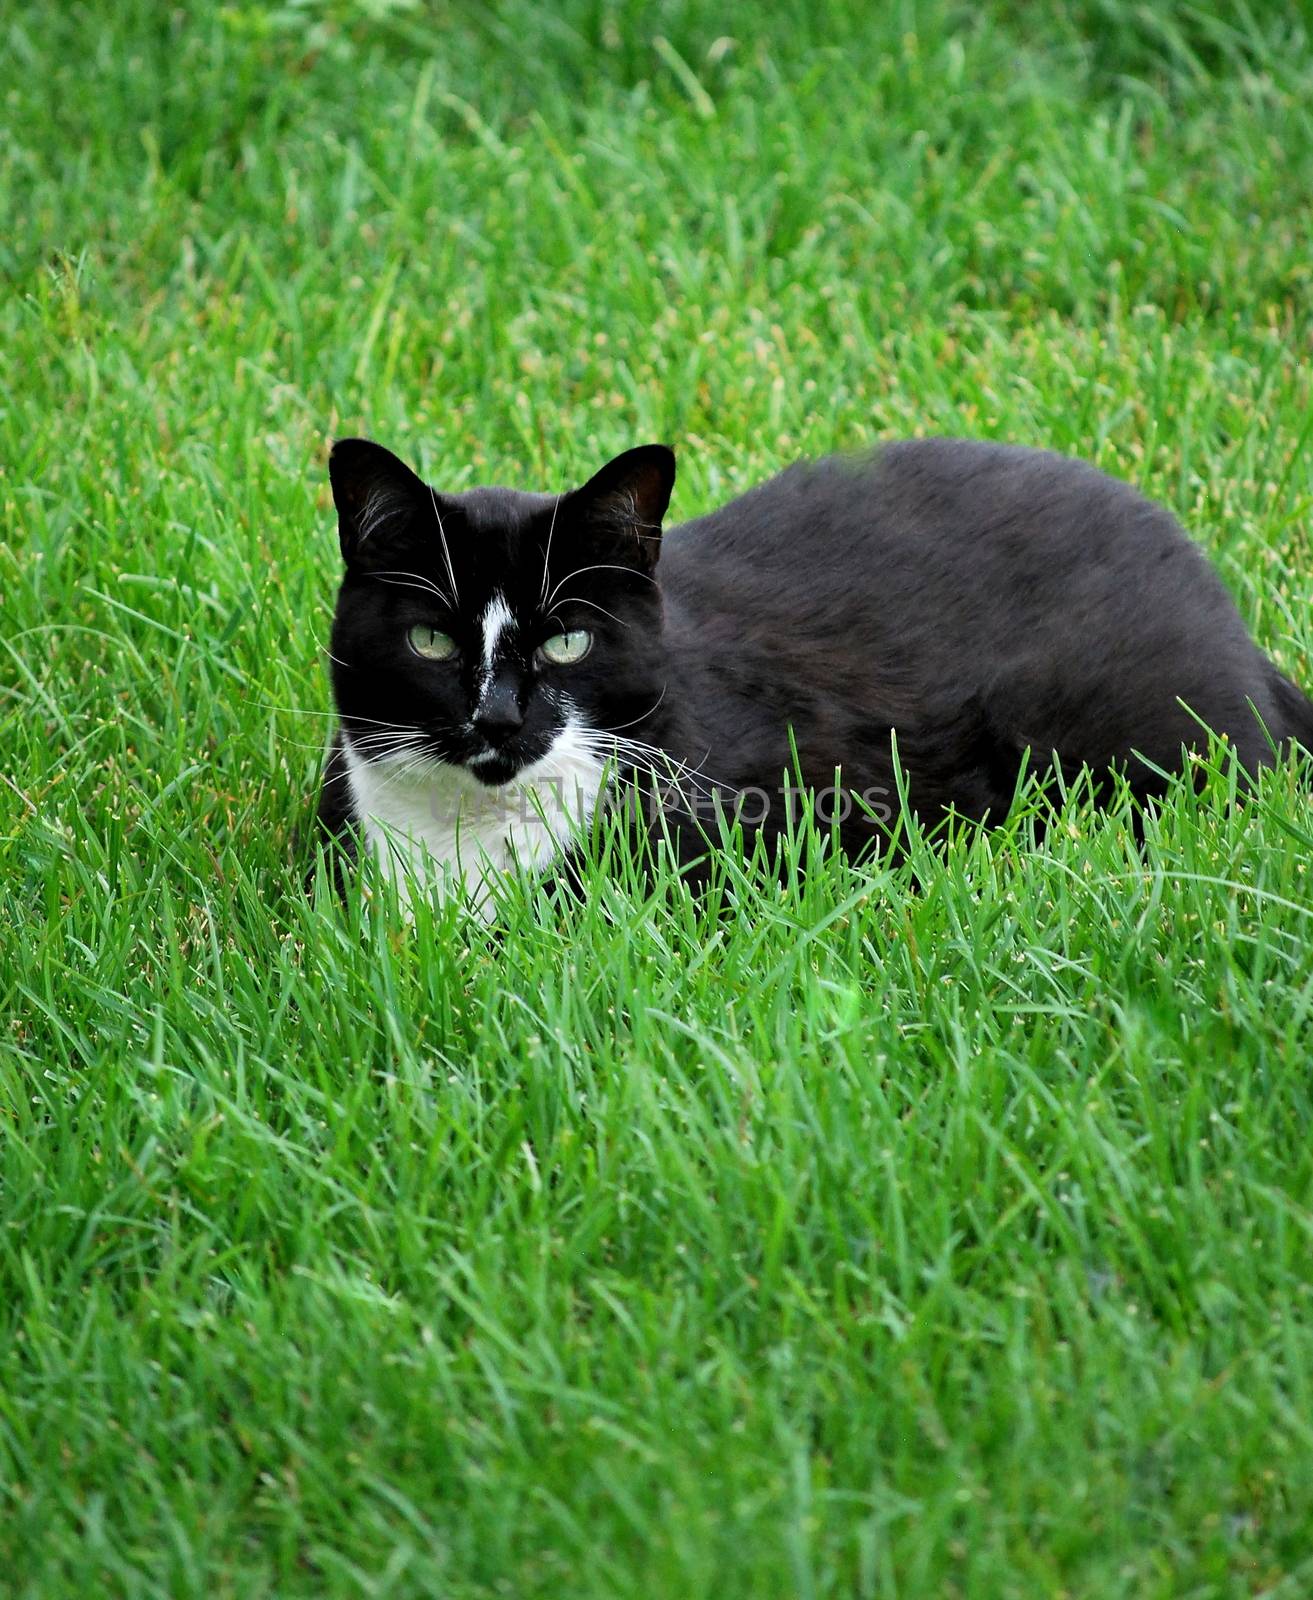 Cat in grass. by oscarcwilliams